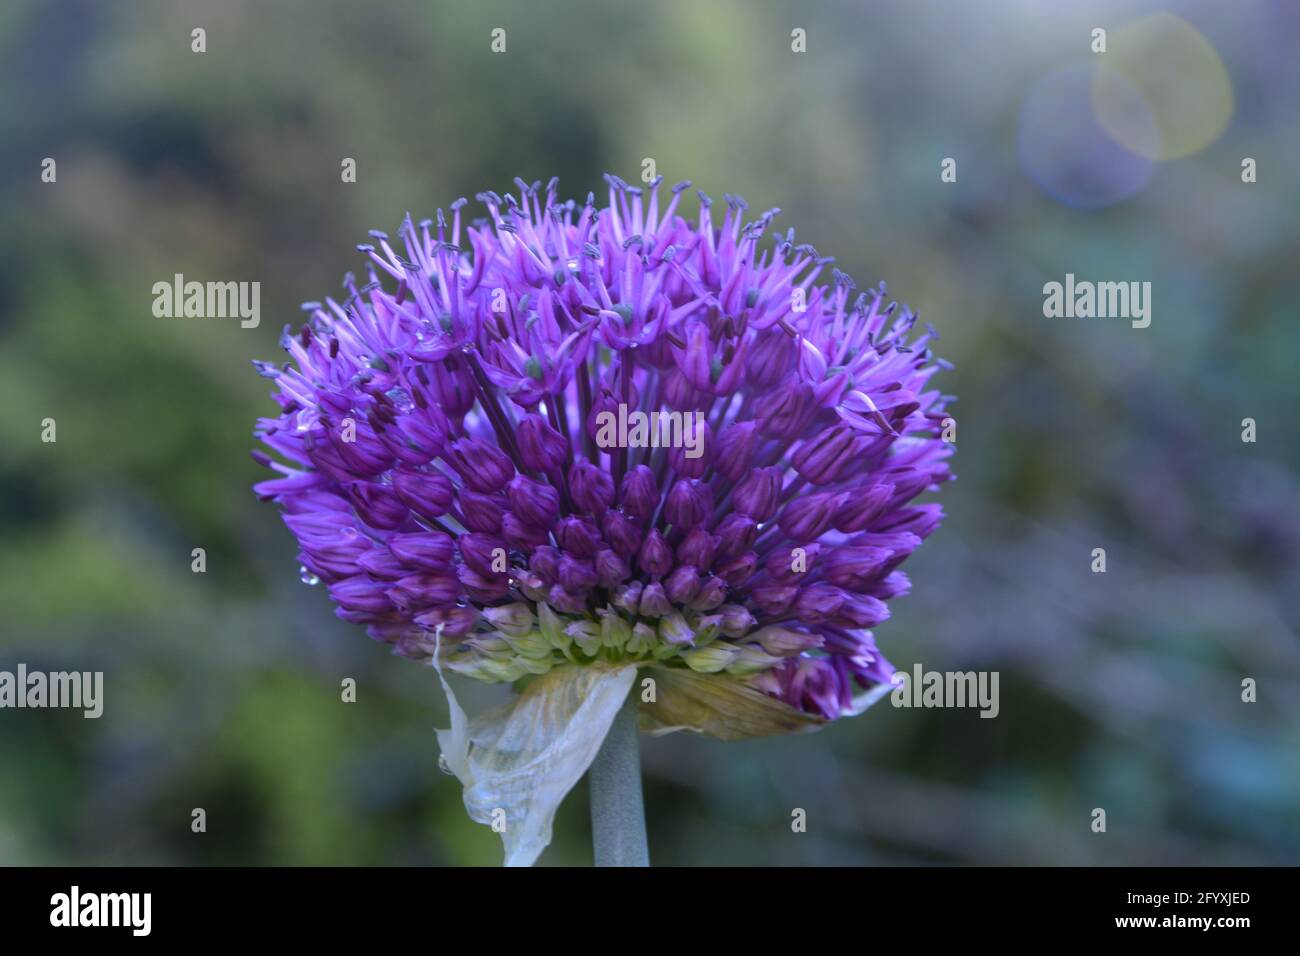 Allium Gladiator, Flower Cambridge UK, purely beautiful and Peaceful Floral Space Stock Photo